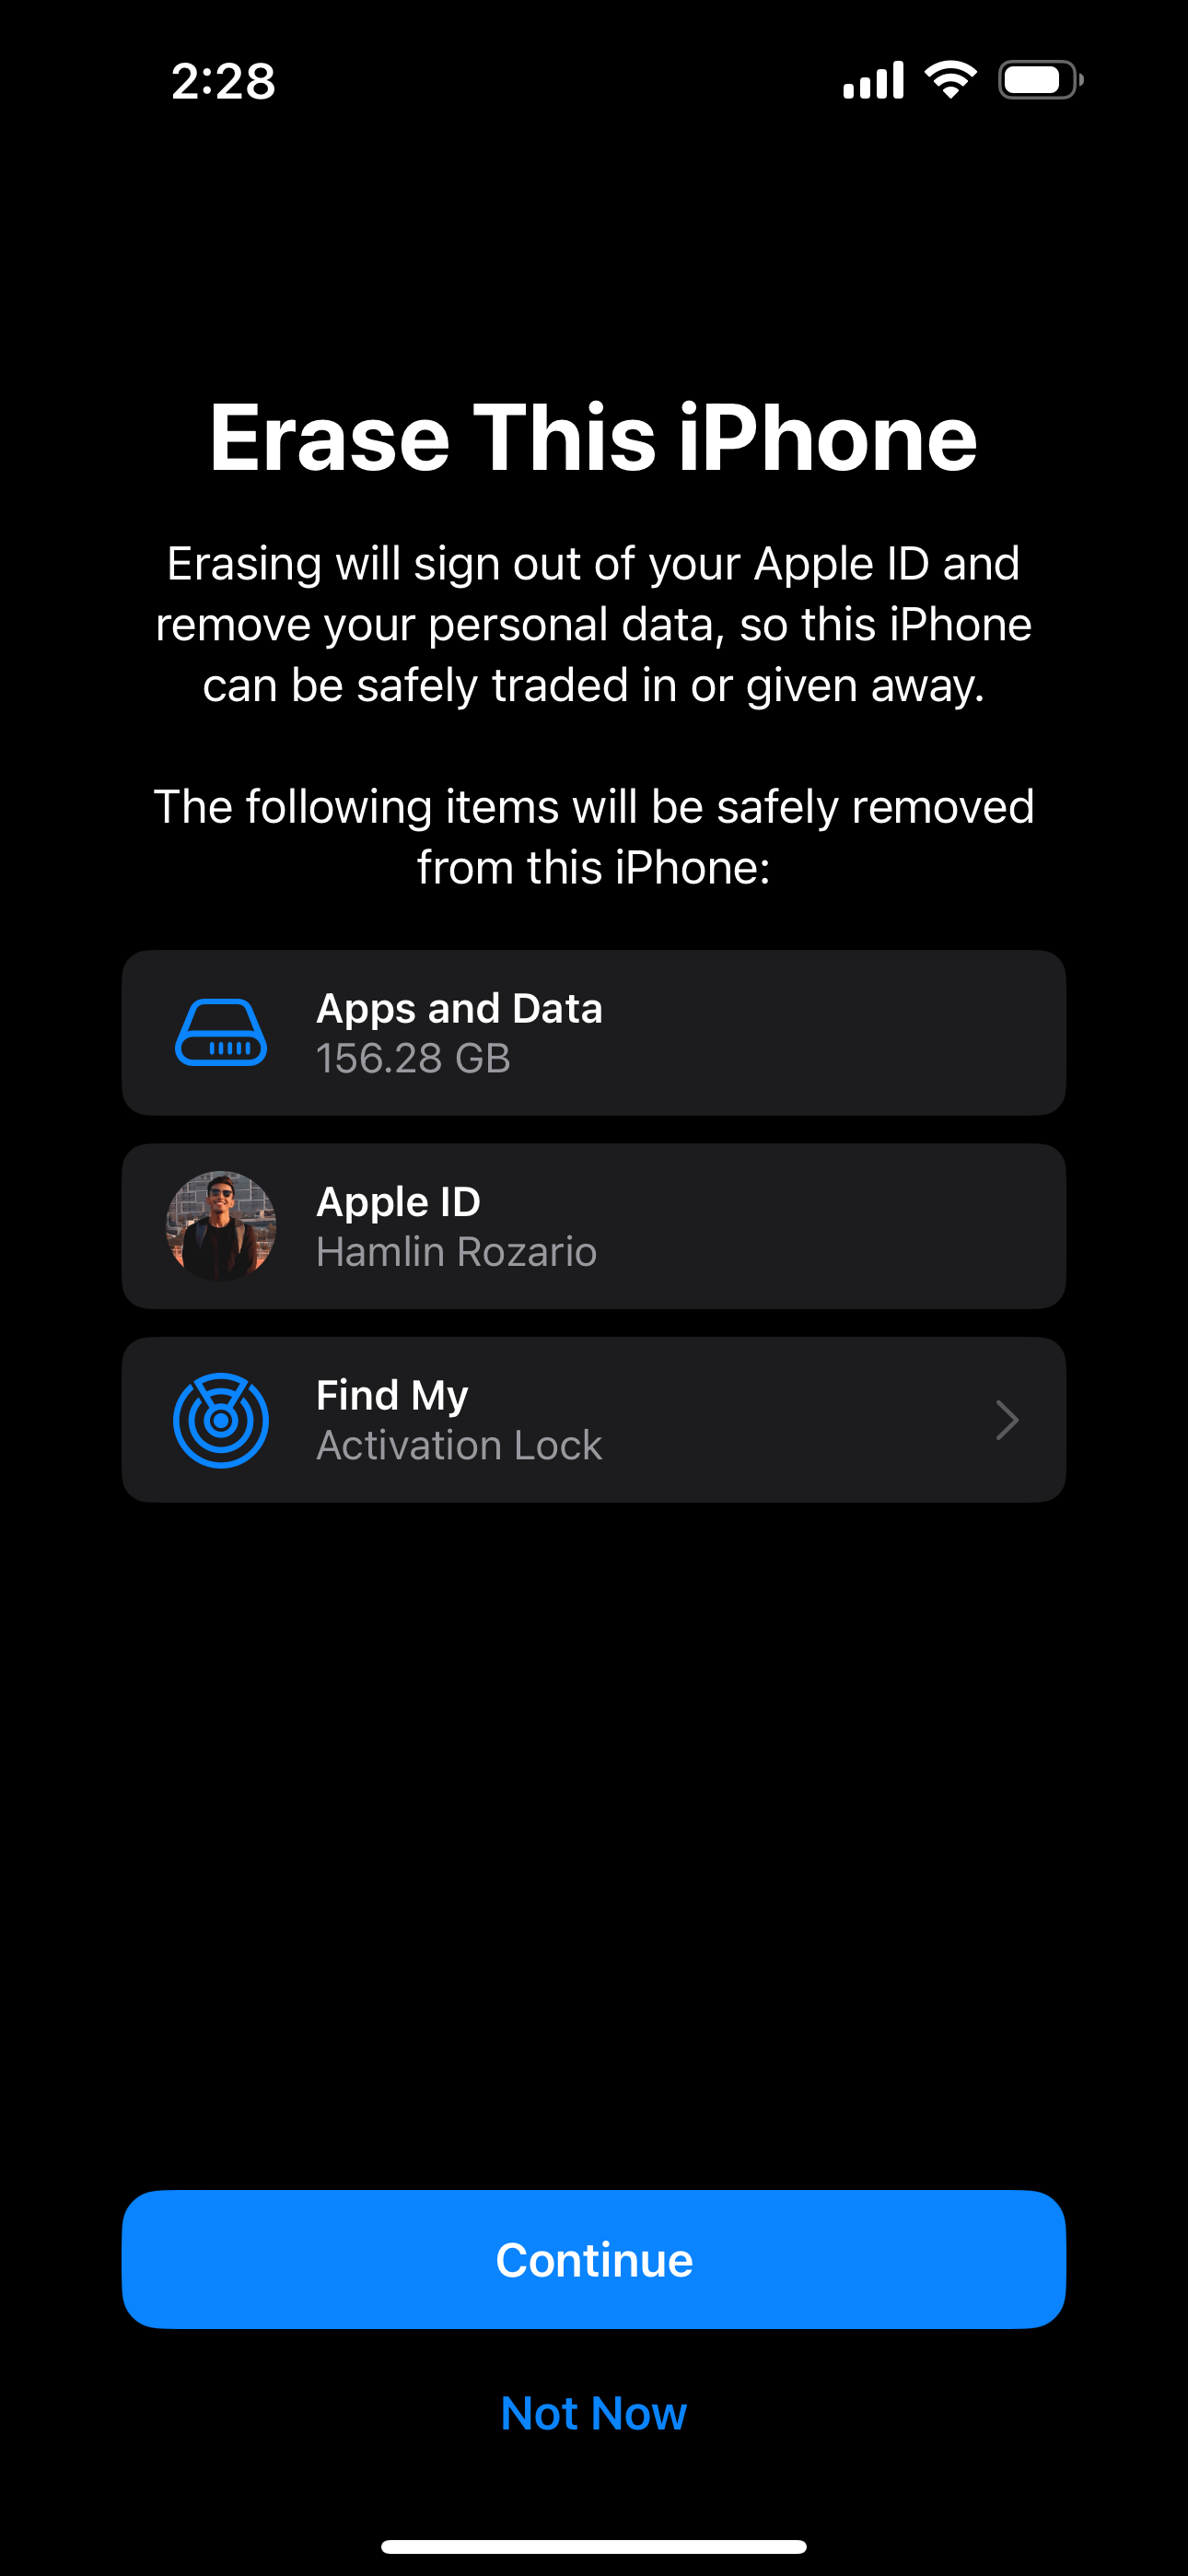 Erase This iPhone confirmation menu in iOS